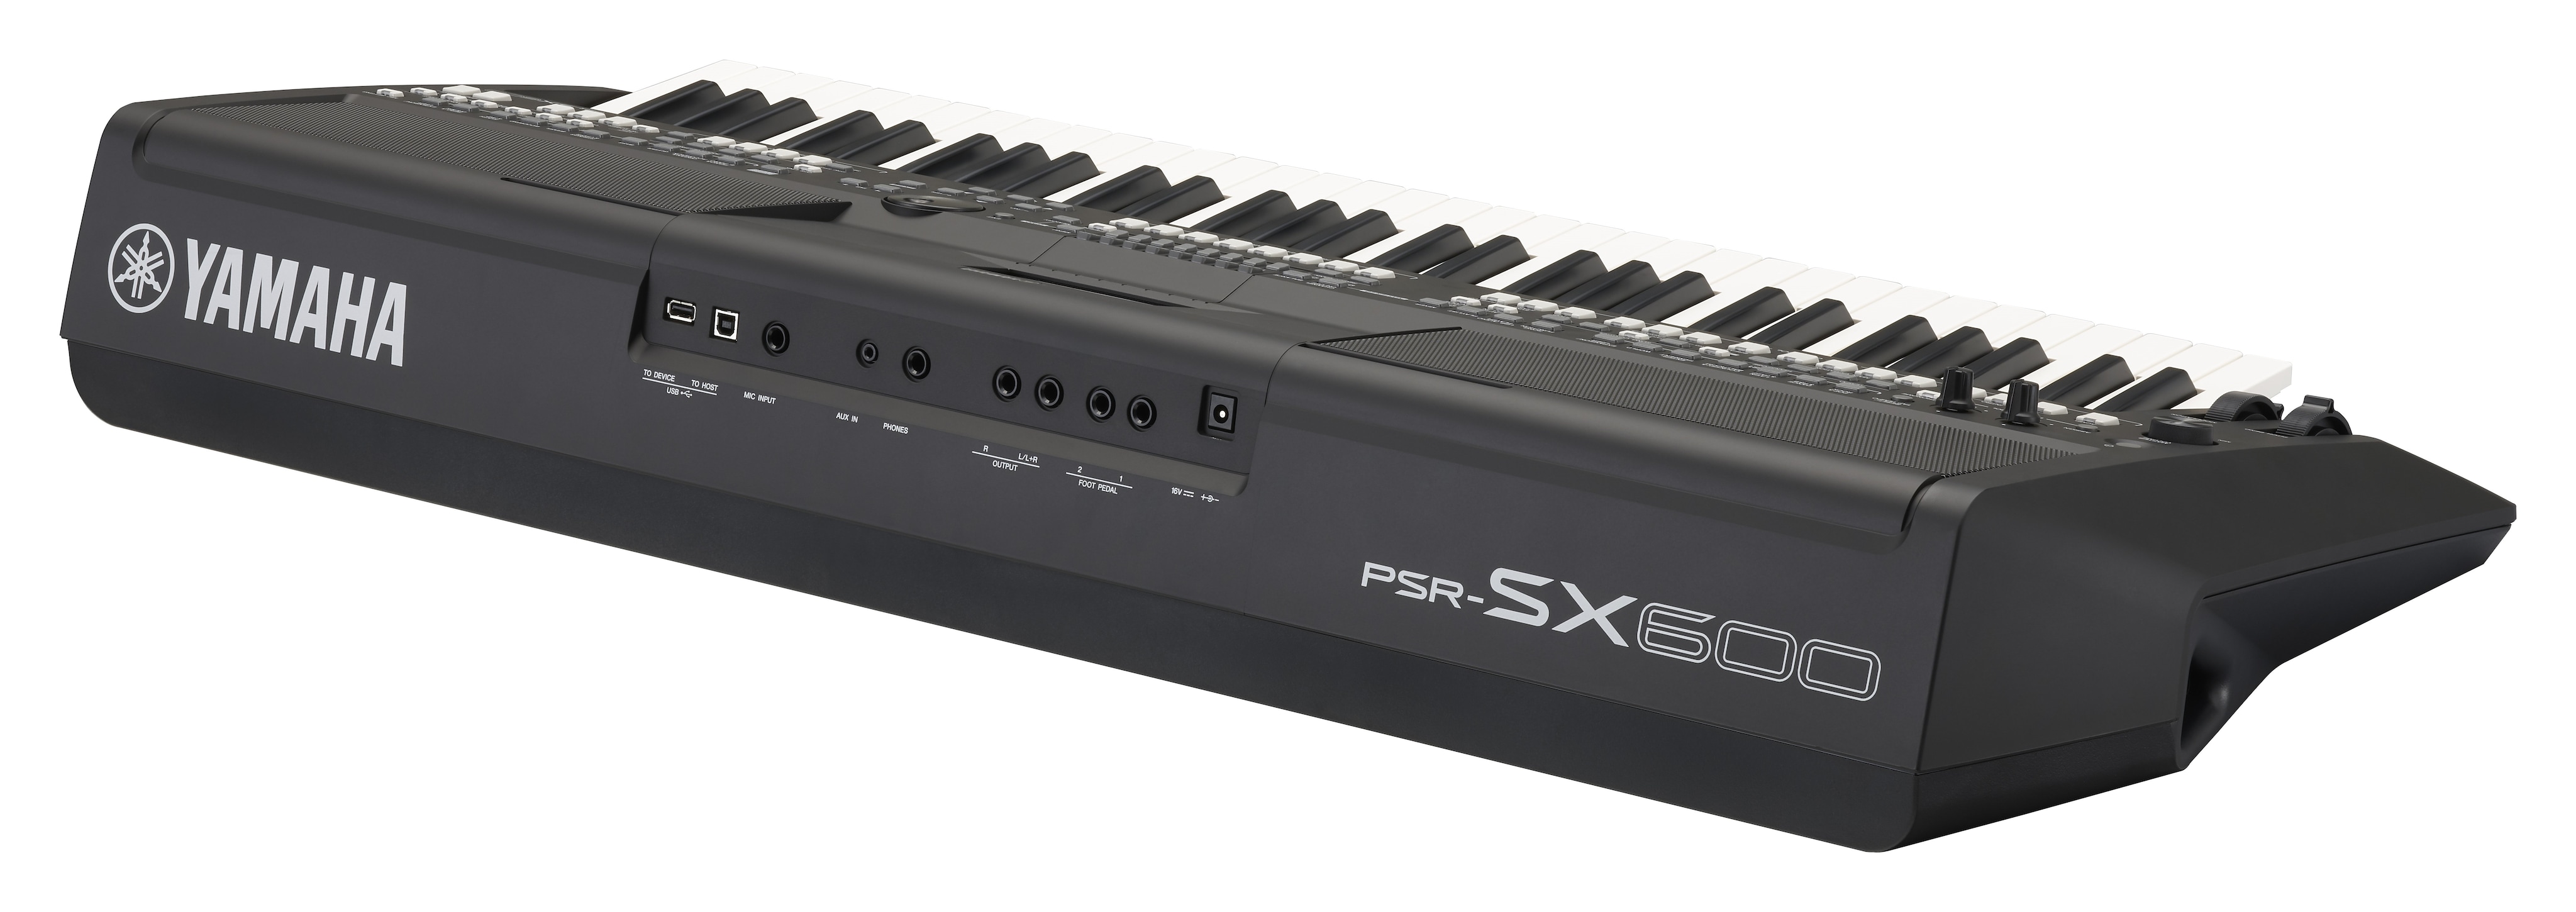 PSR-SX600 | Yamaha Corporation.